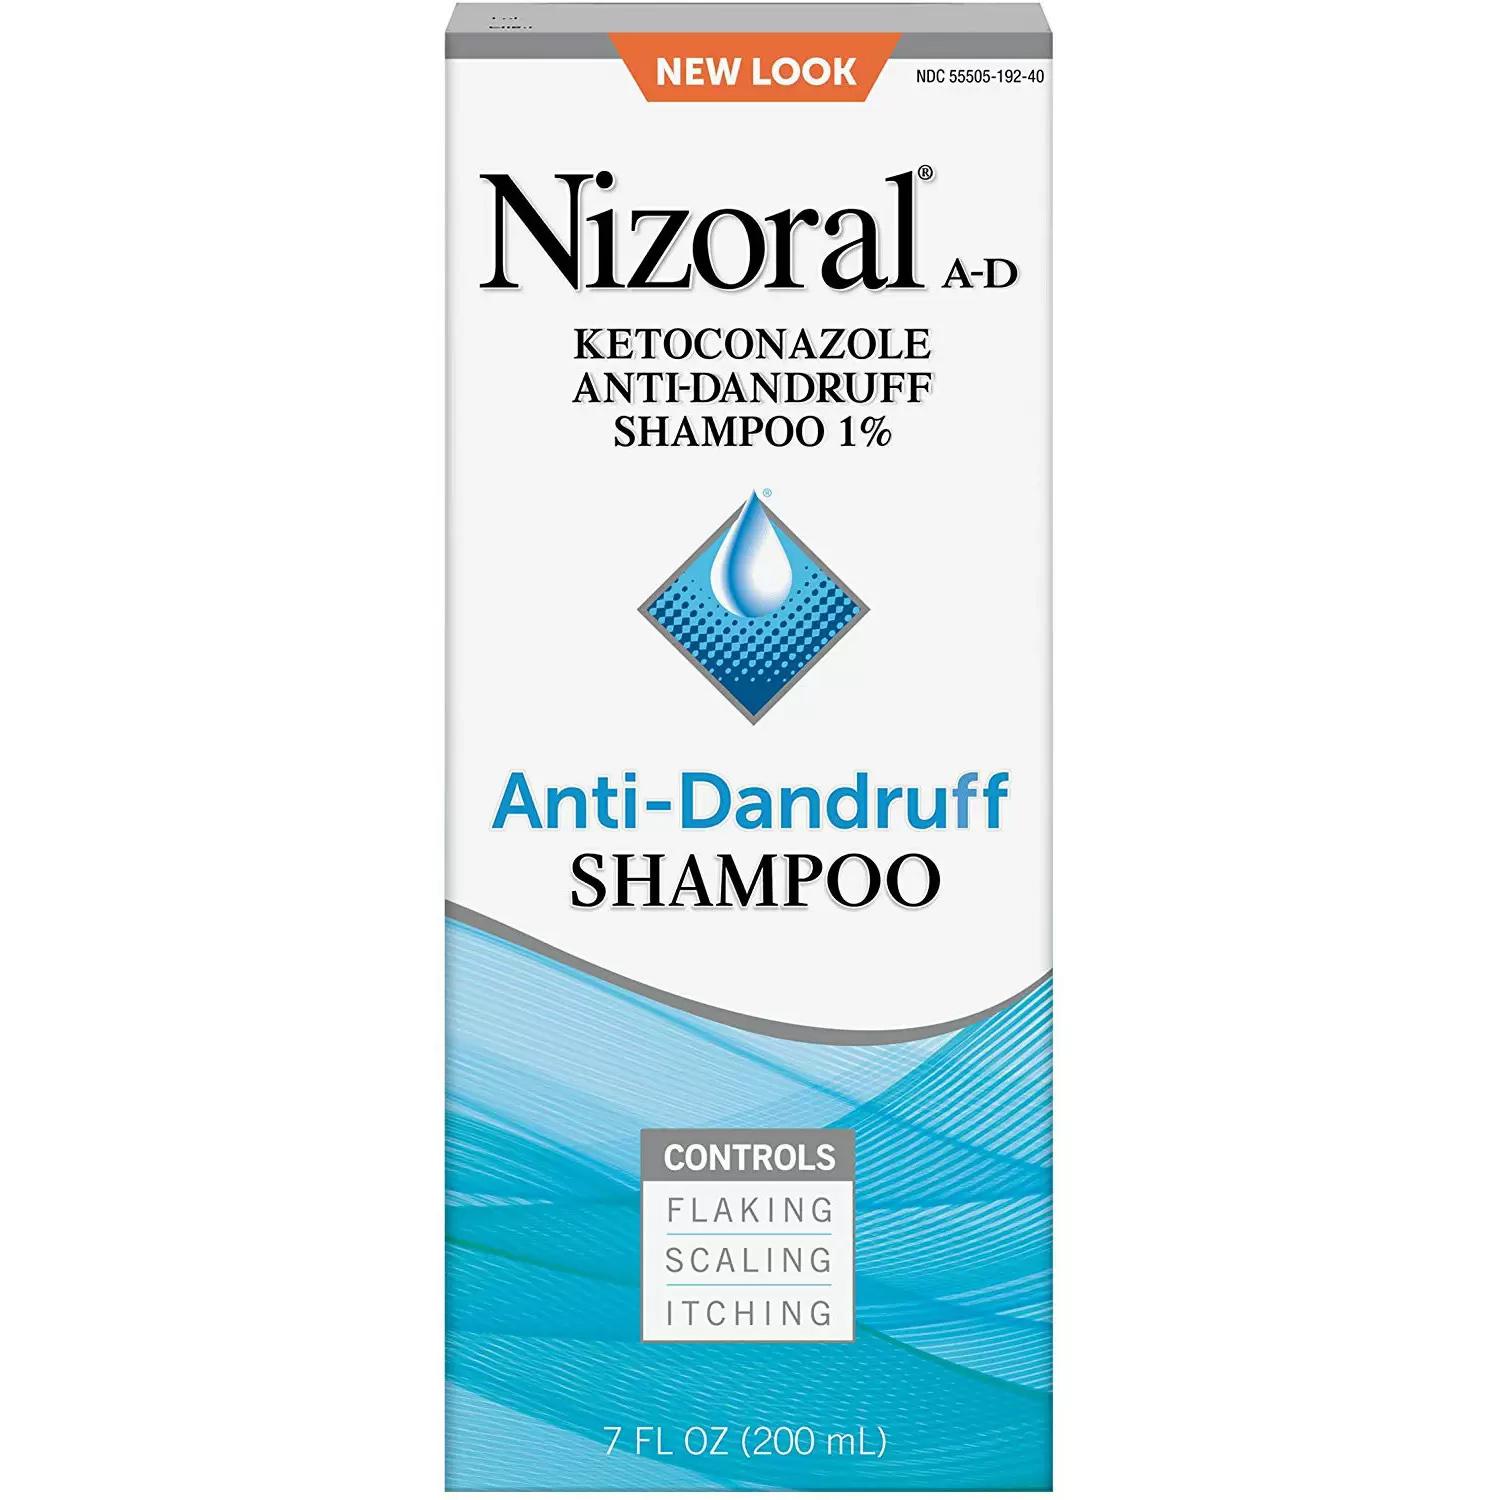 Nizoral A-D Anti-Dandruff Shampoo for $10.43 Shipped